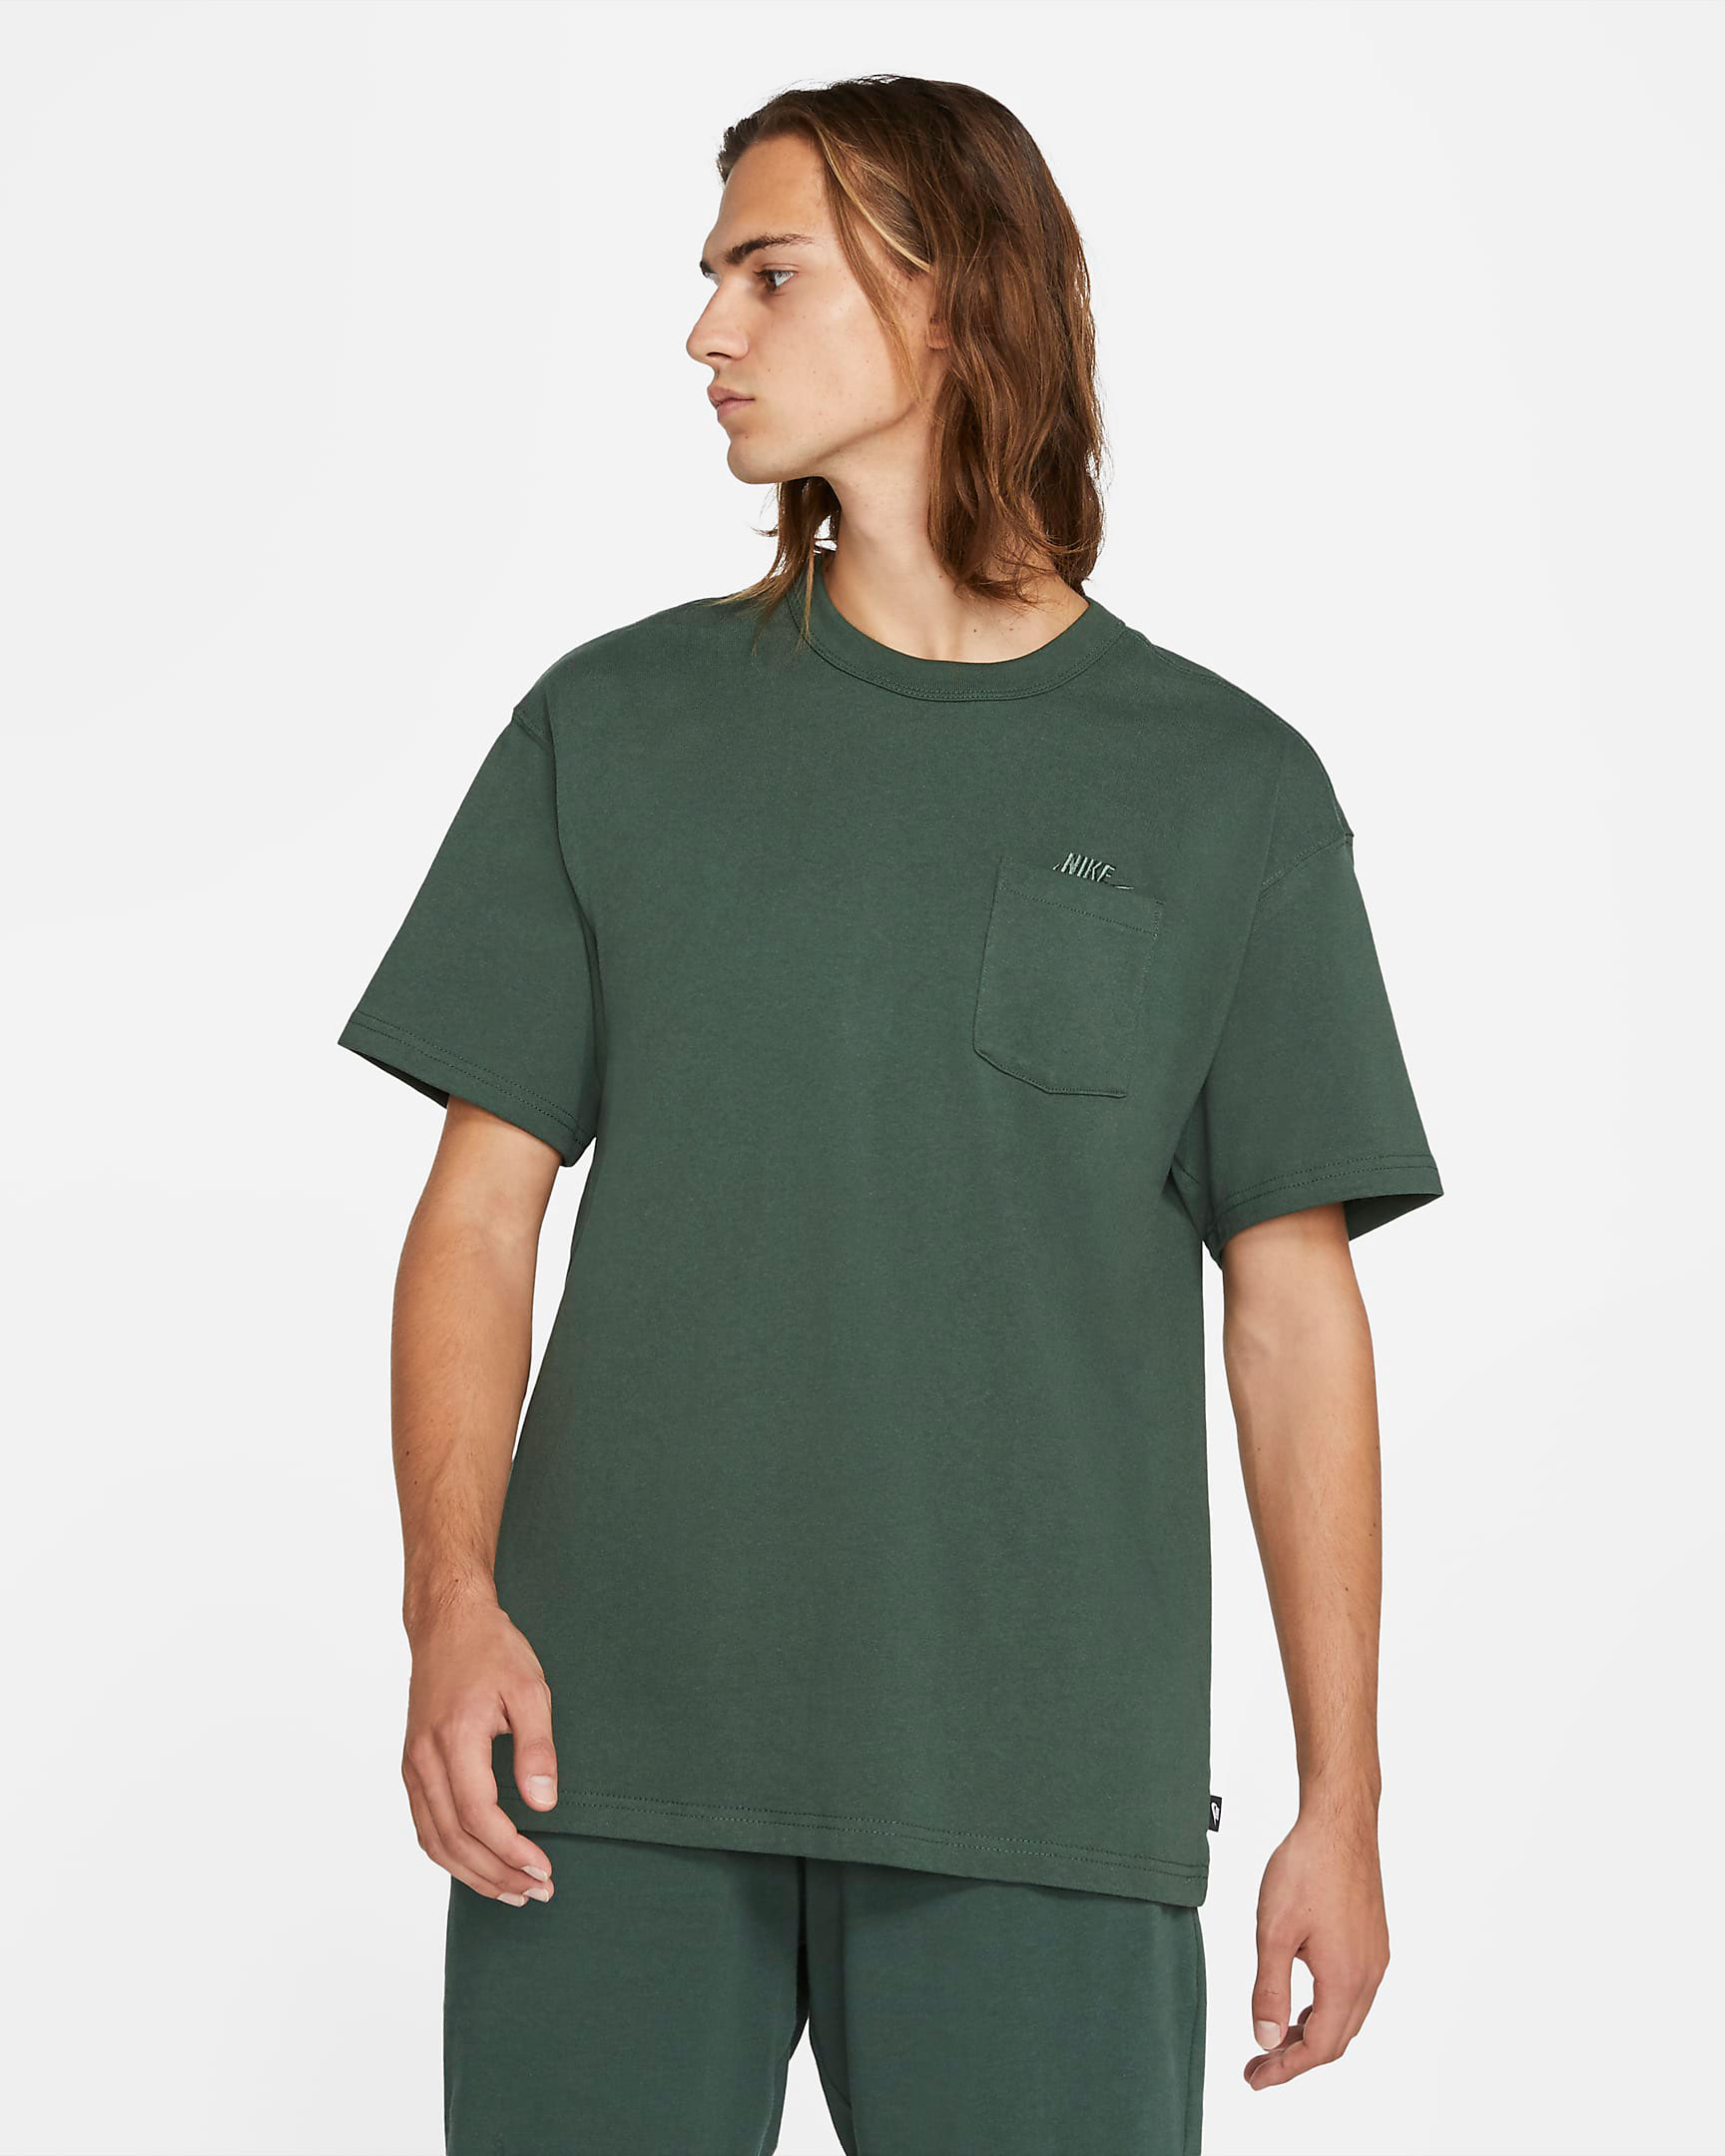 nike-galactic-jade-pocket-t-shirt-1